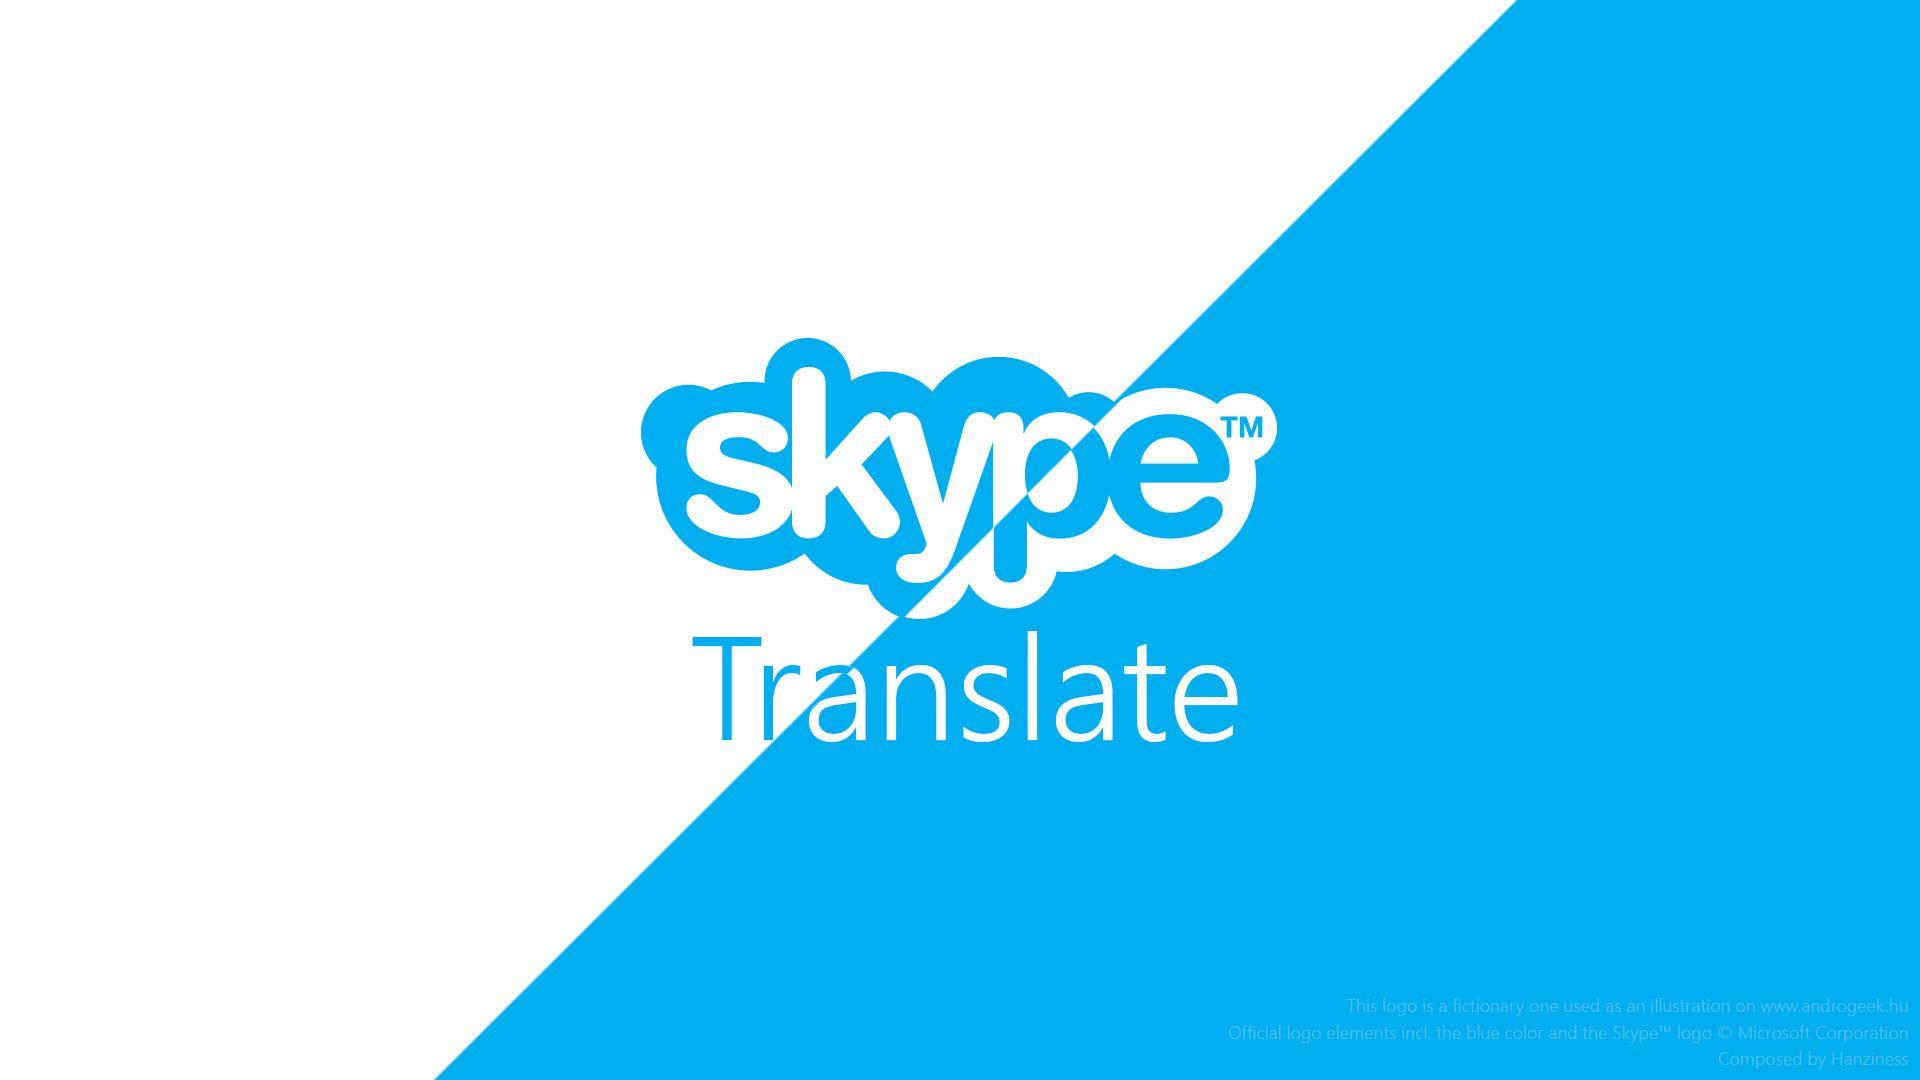 Official Skype Logo - How to set up and use Skype Translator | Techyuga